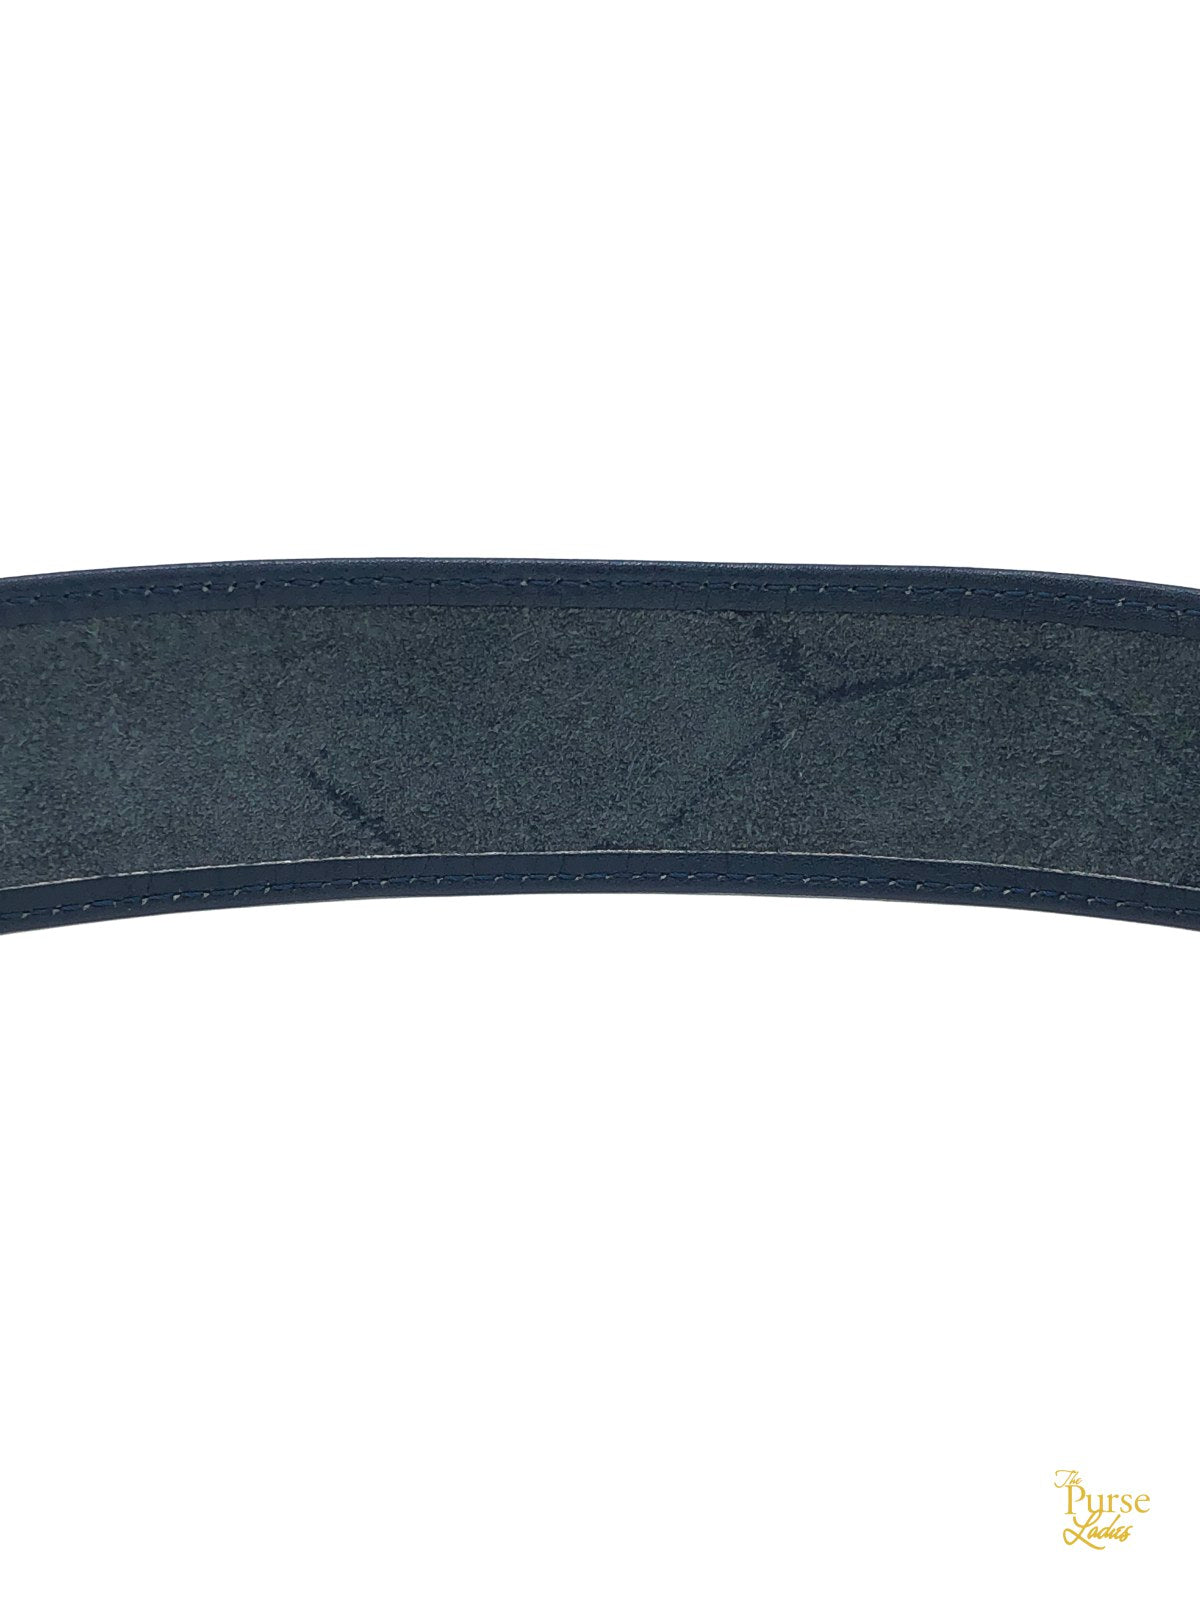 CHRISTIAN DIOR Blue Leather Vintage Waist Belt SZ Small